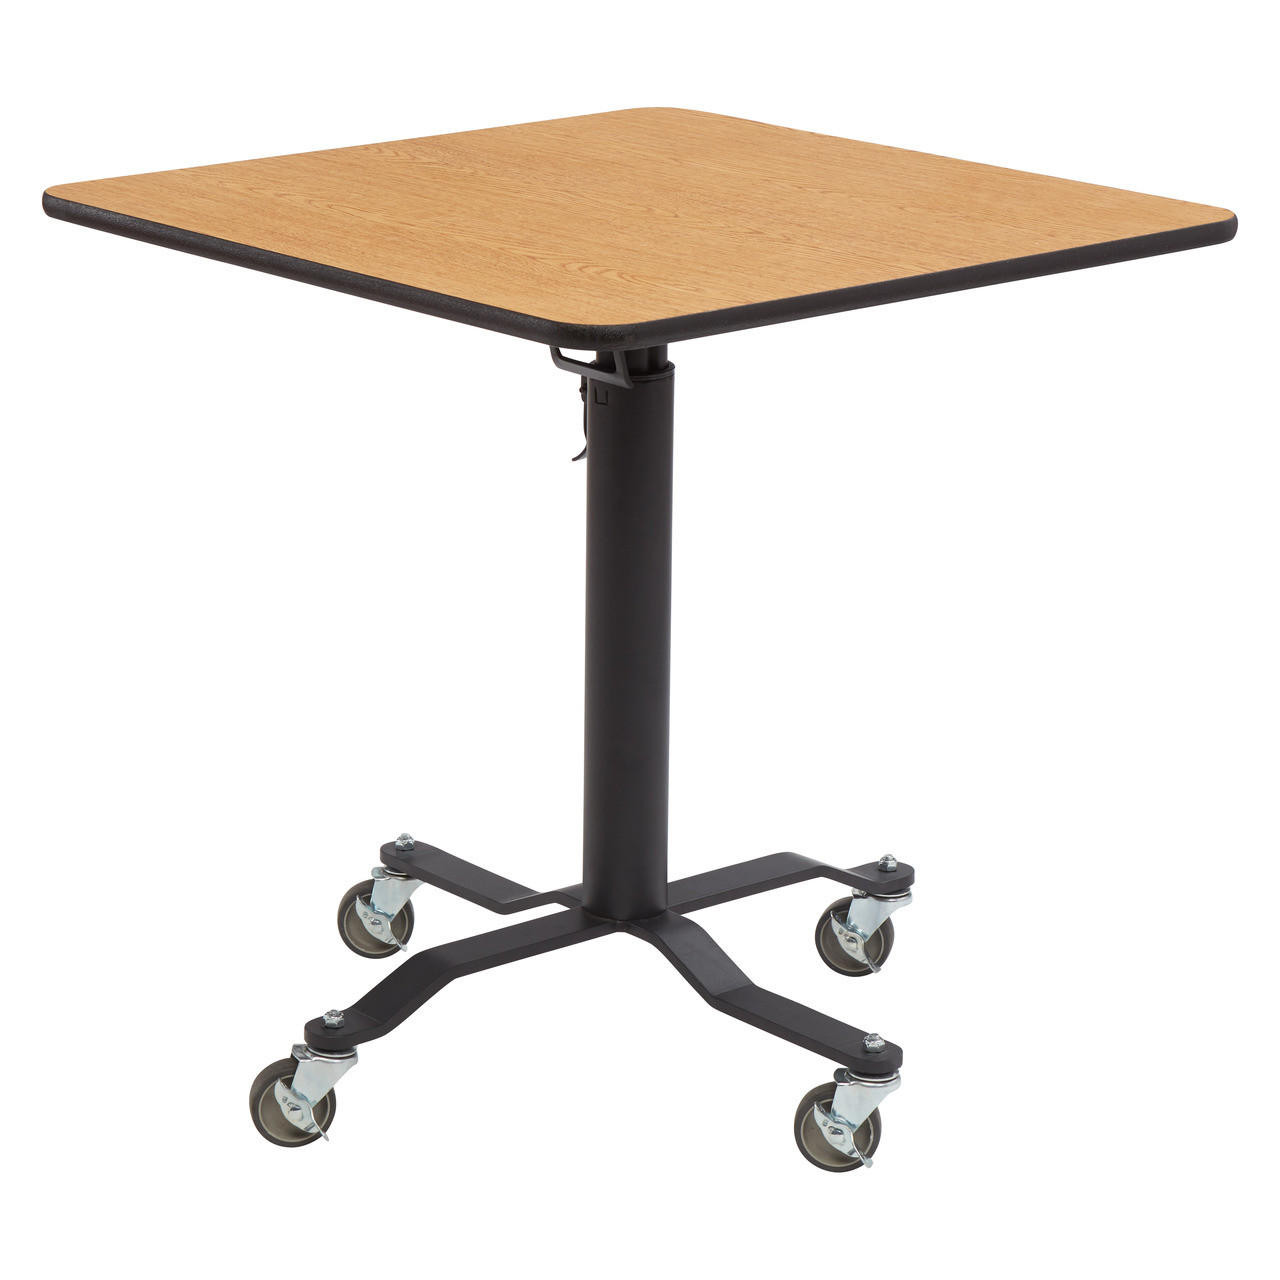 nps-premium-plus-cafe-table-30-square-high-pressure-laminate-top-mdf-core/